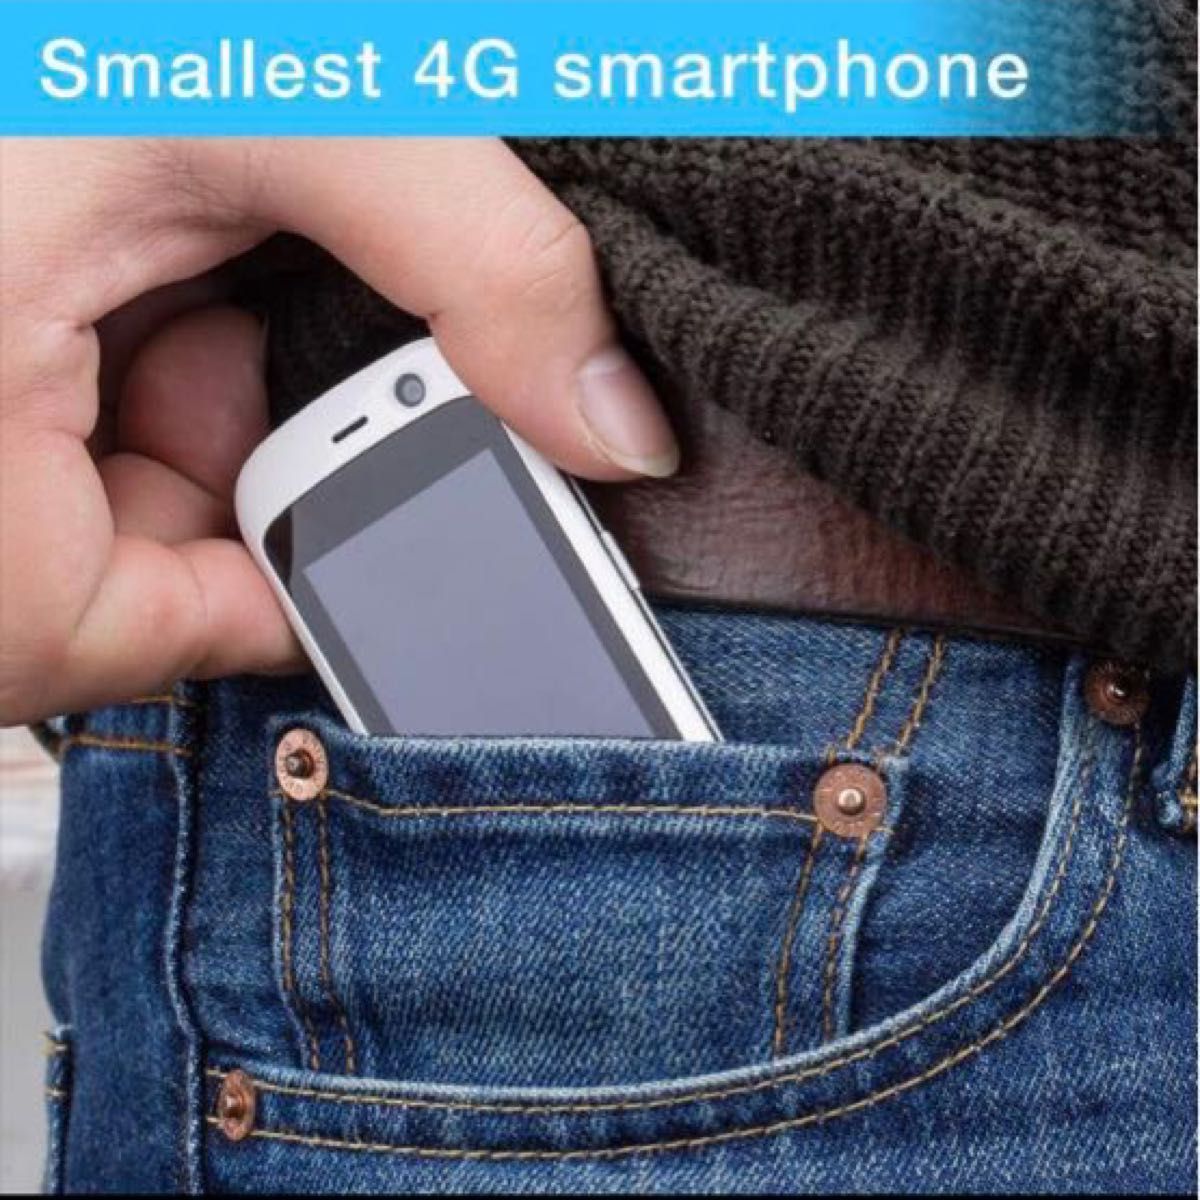 Unihertz Jelly Pro  世界最小の４Gスマートフォン